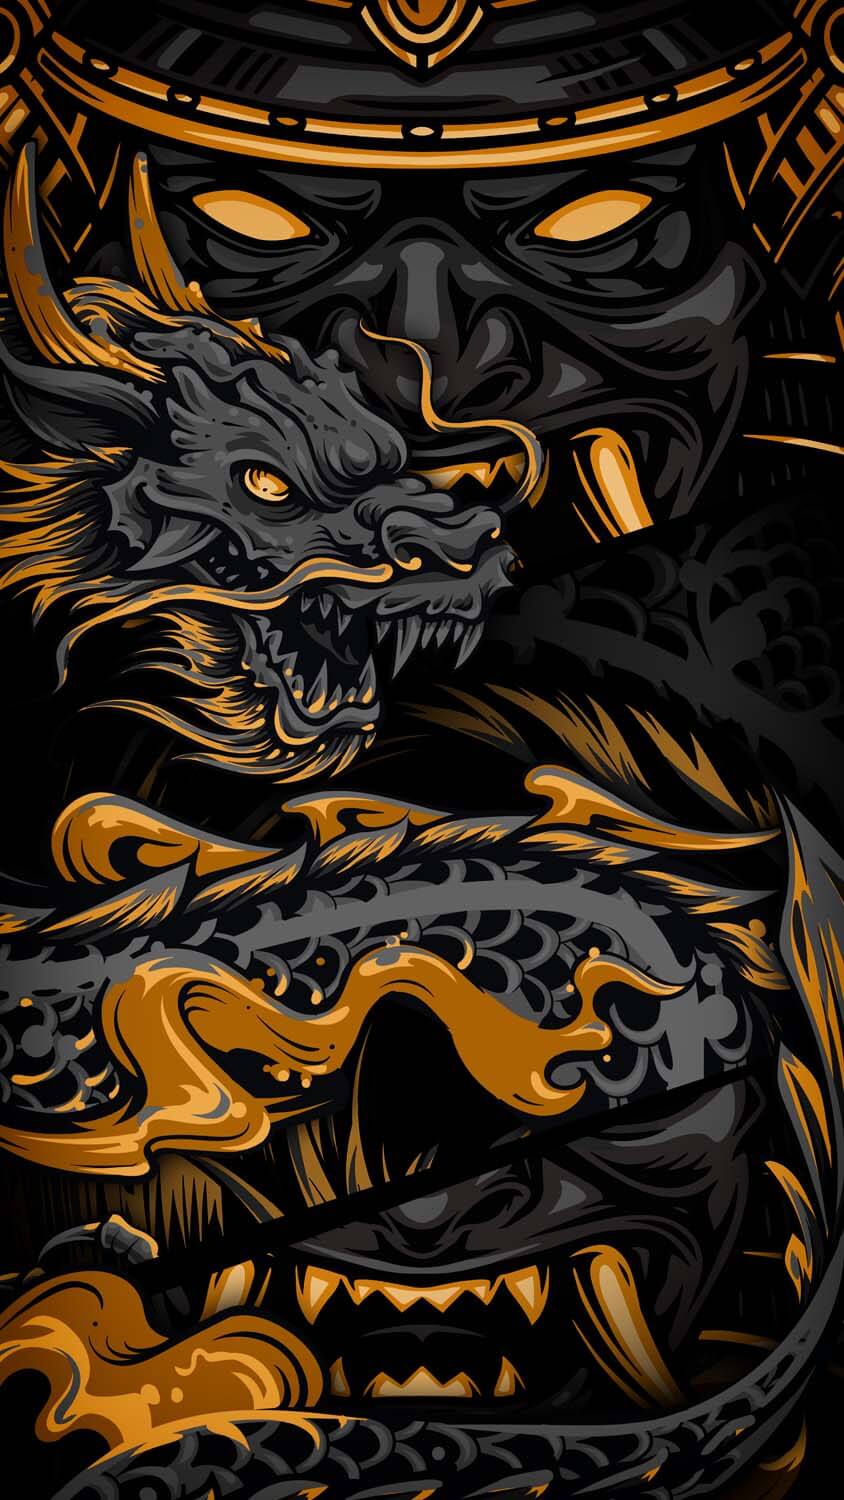 Samurai vs Dragon iPhone Wallpaper HD